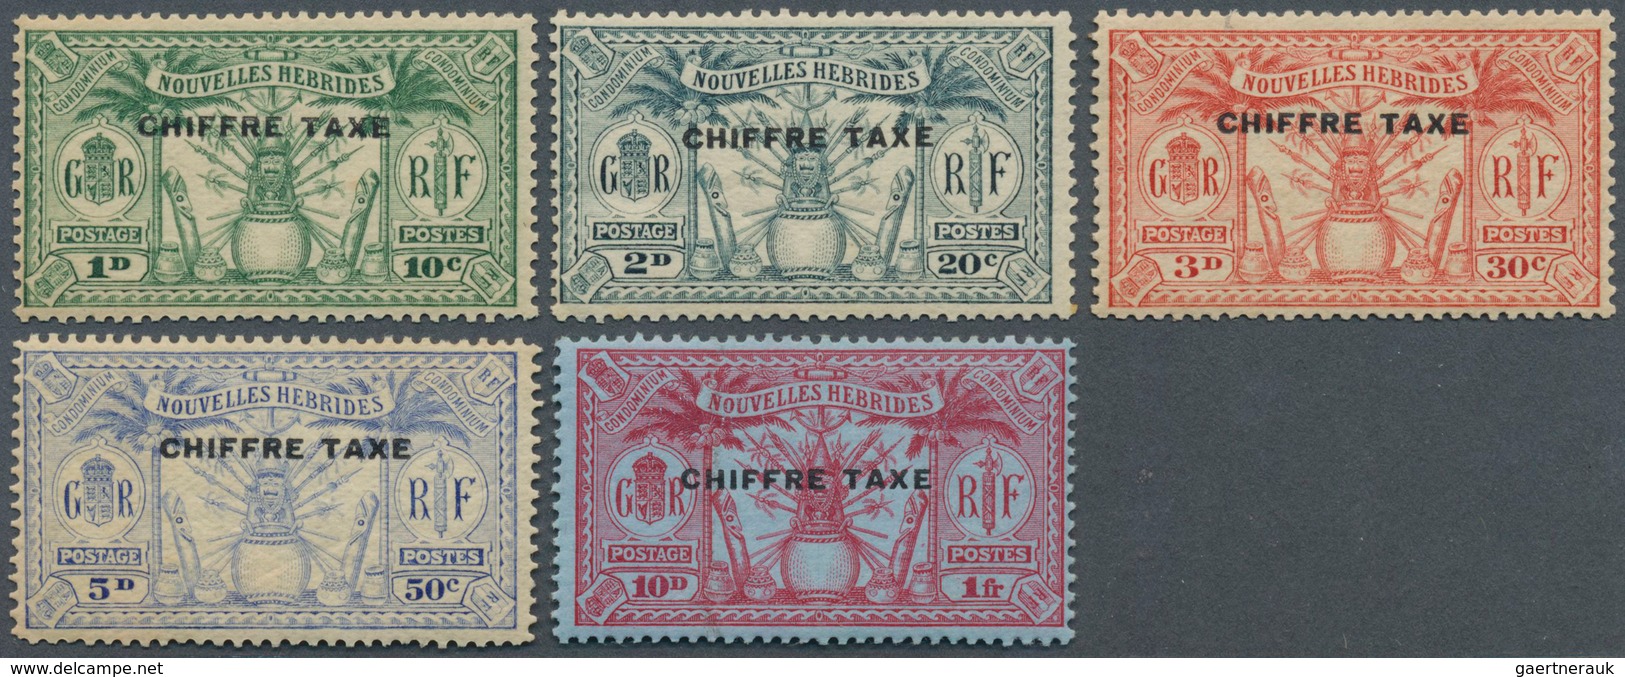 12280 Neue Hebriden - Portomarken: 1925 Edition Of Postage Stamps Printed With "POSTAGE DUE", Some With Br - Portomarken